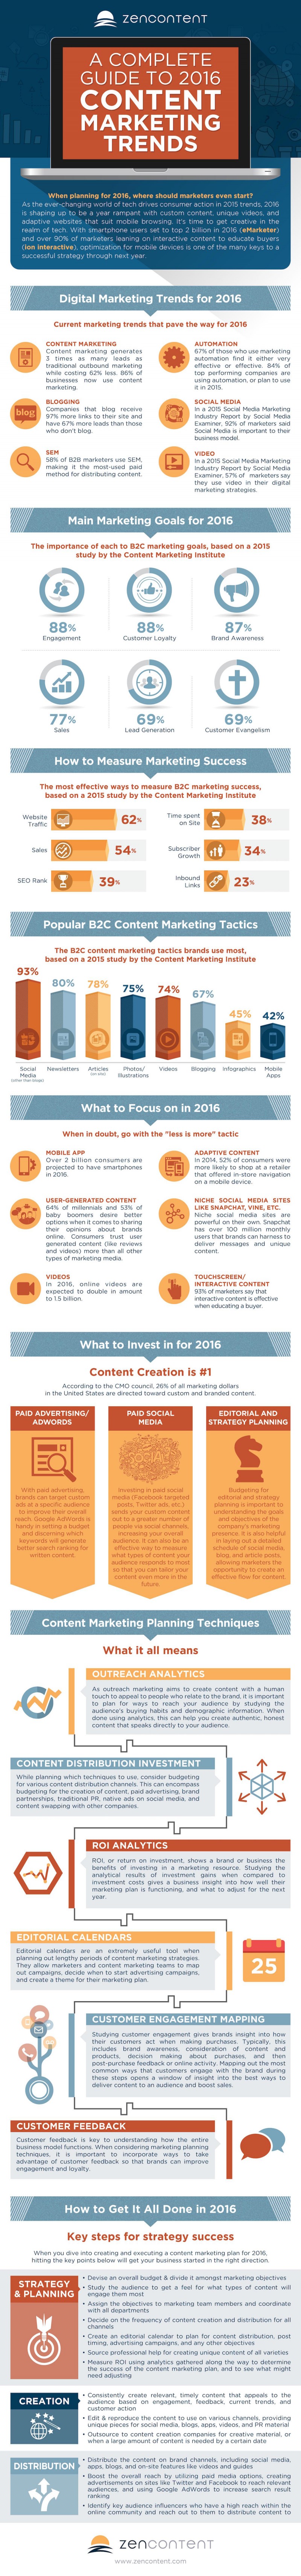 Infographie 259 - Digital content trends 2016